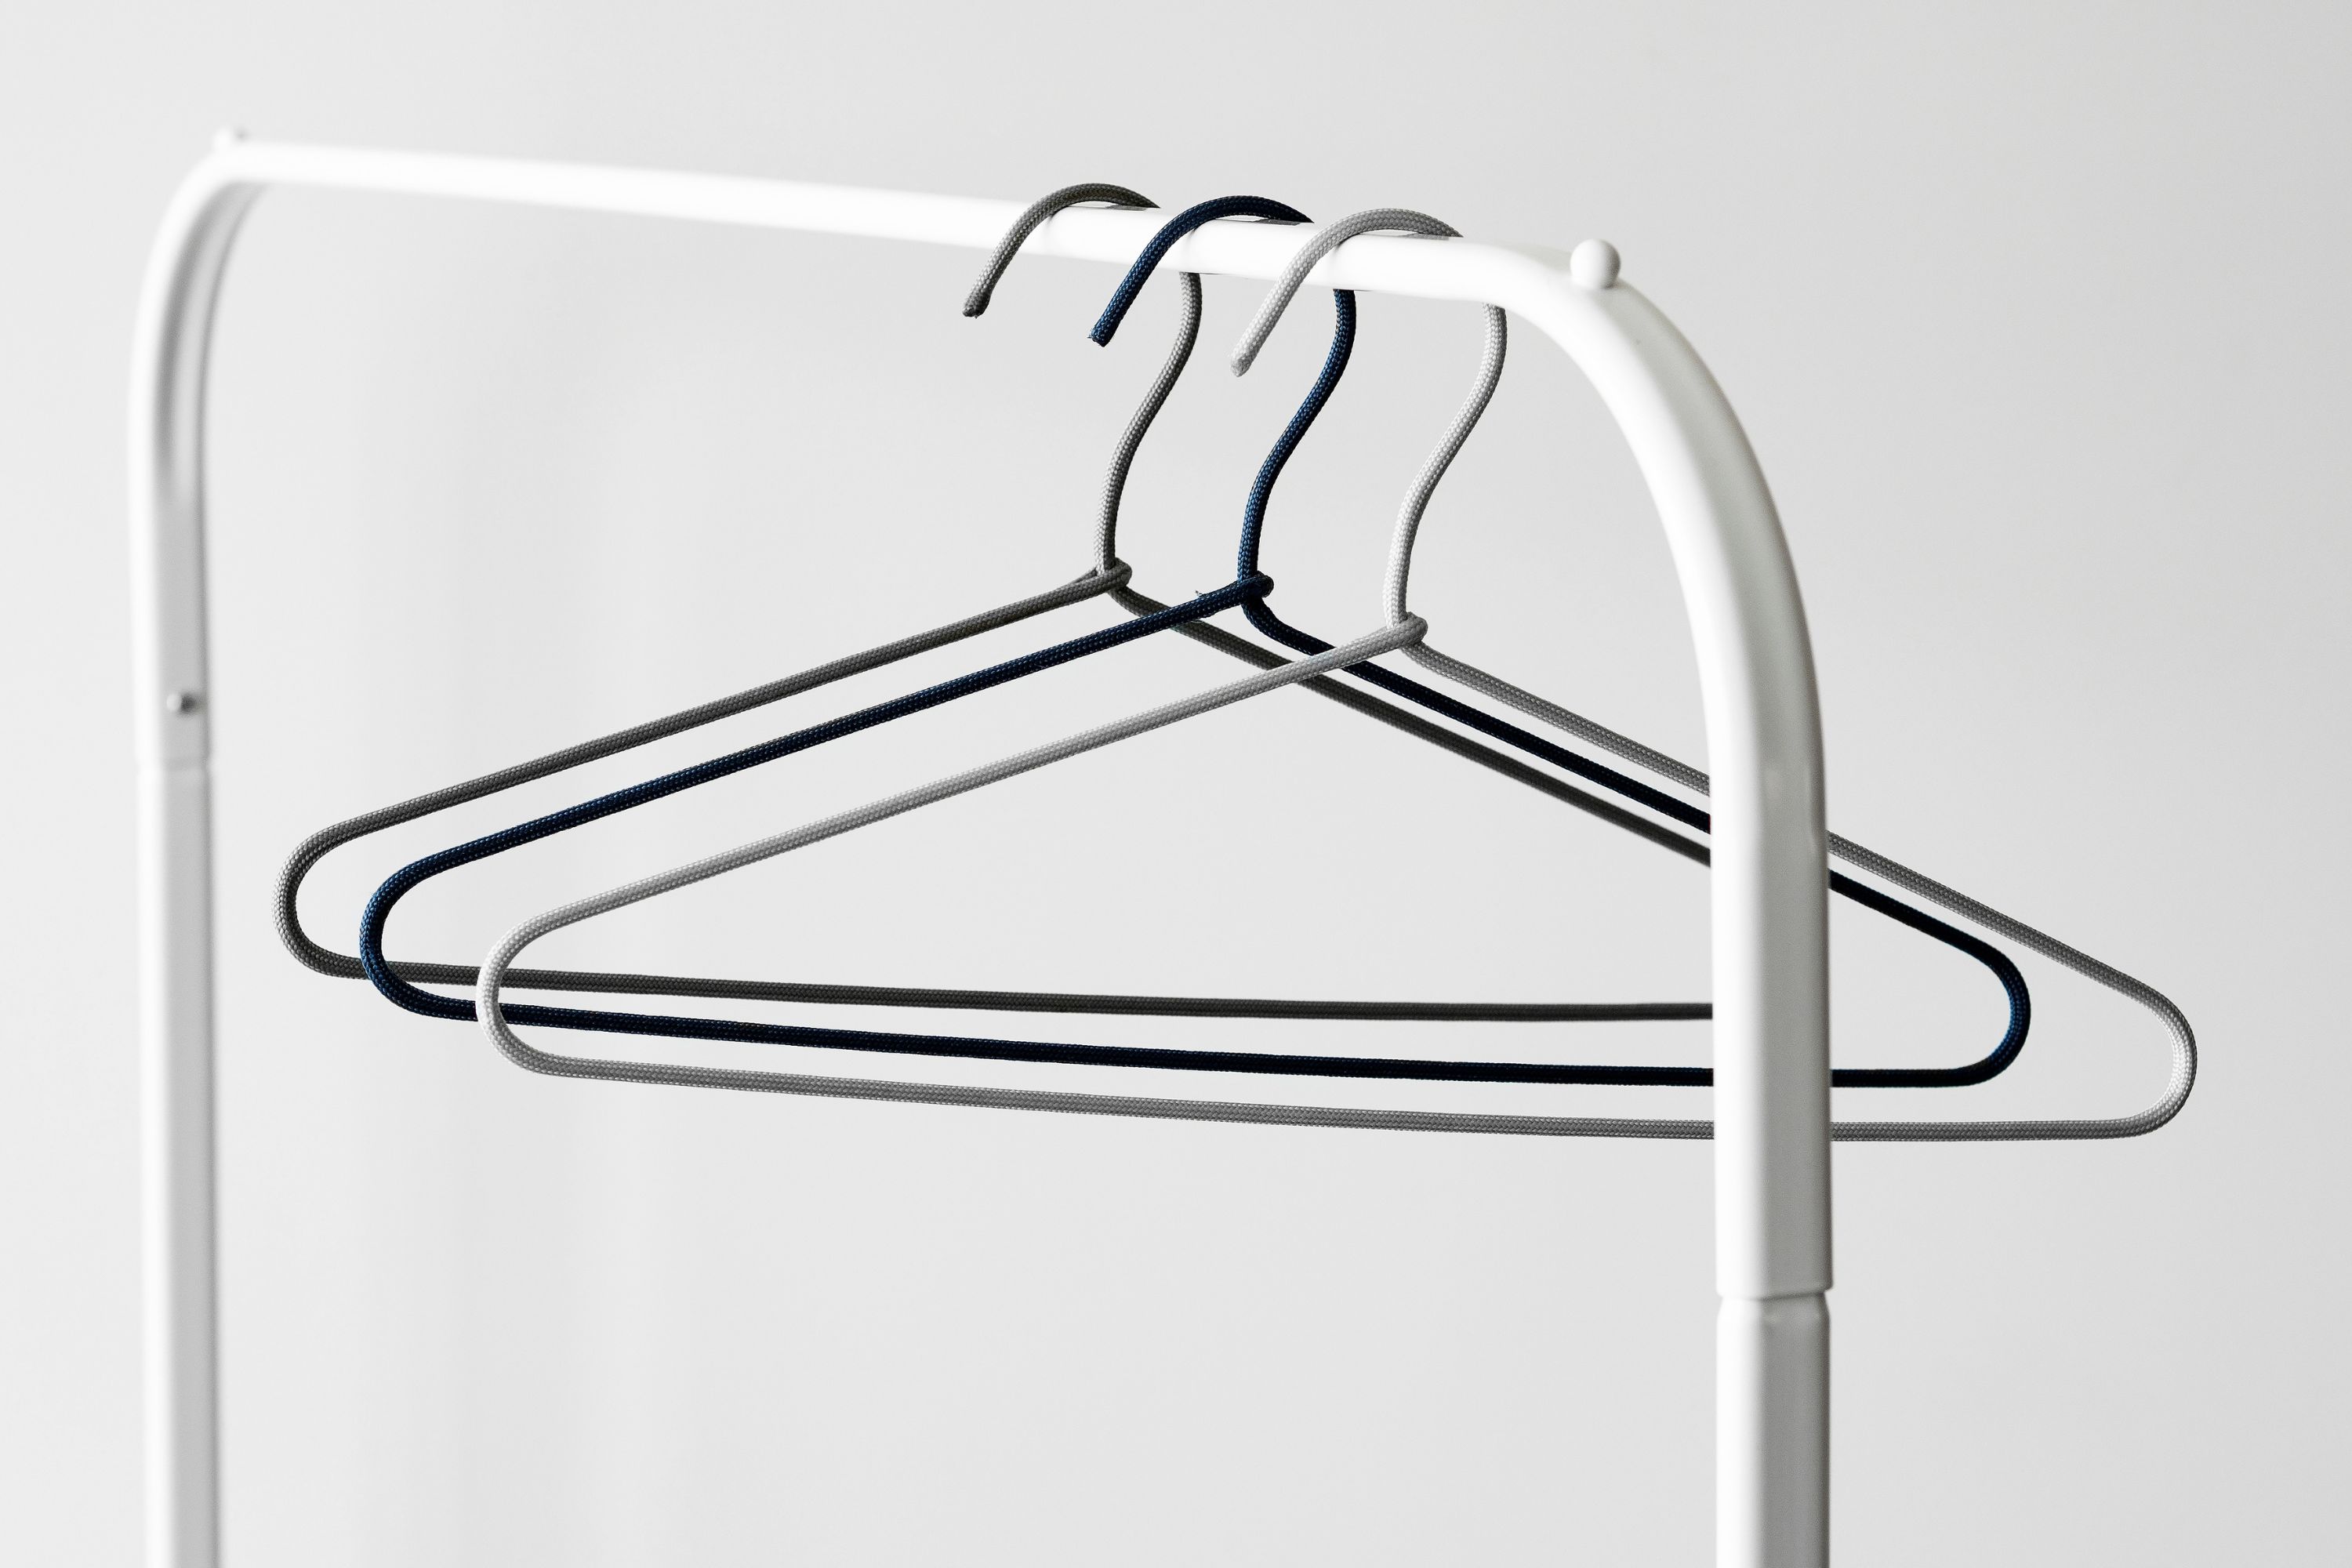 DIY coat hanger plunger to unblock a toilet